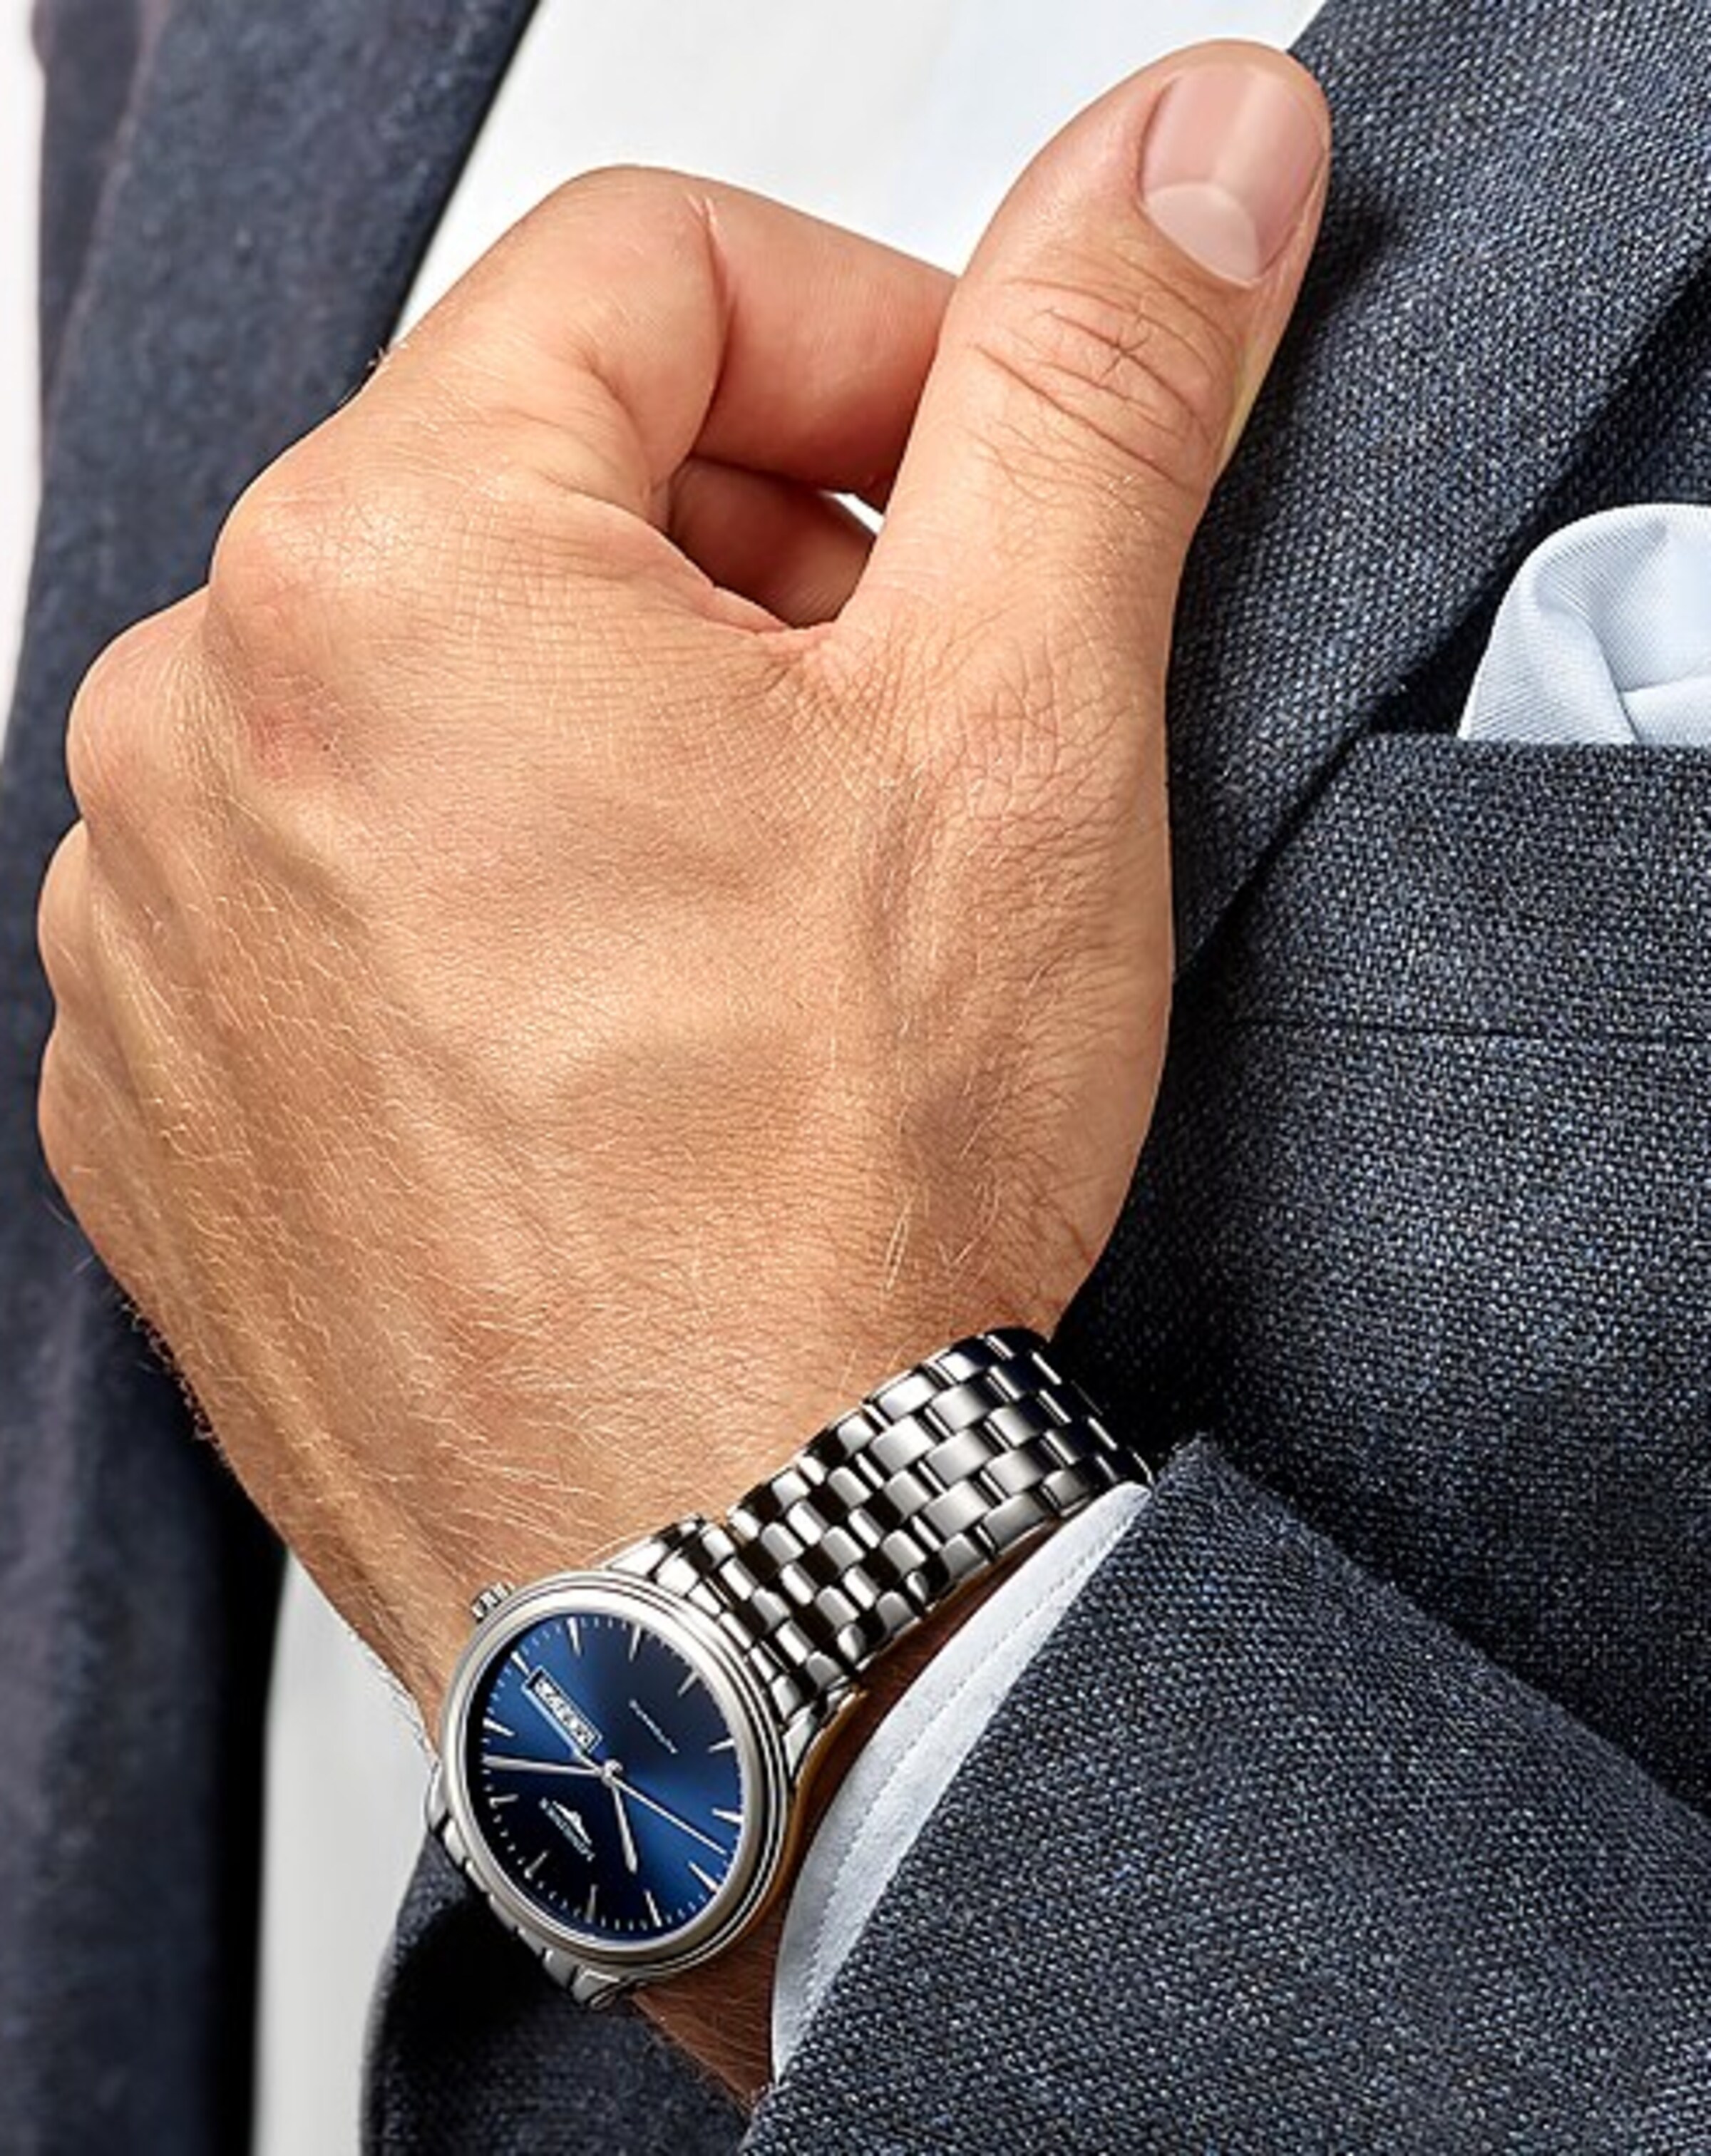 a man in suit is wearing a Longines watch